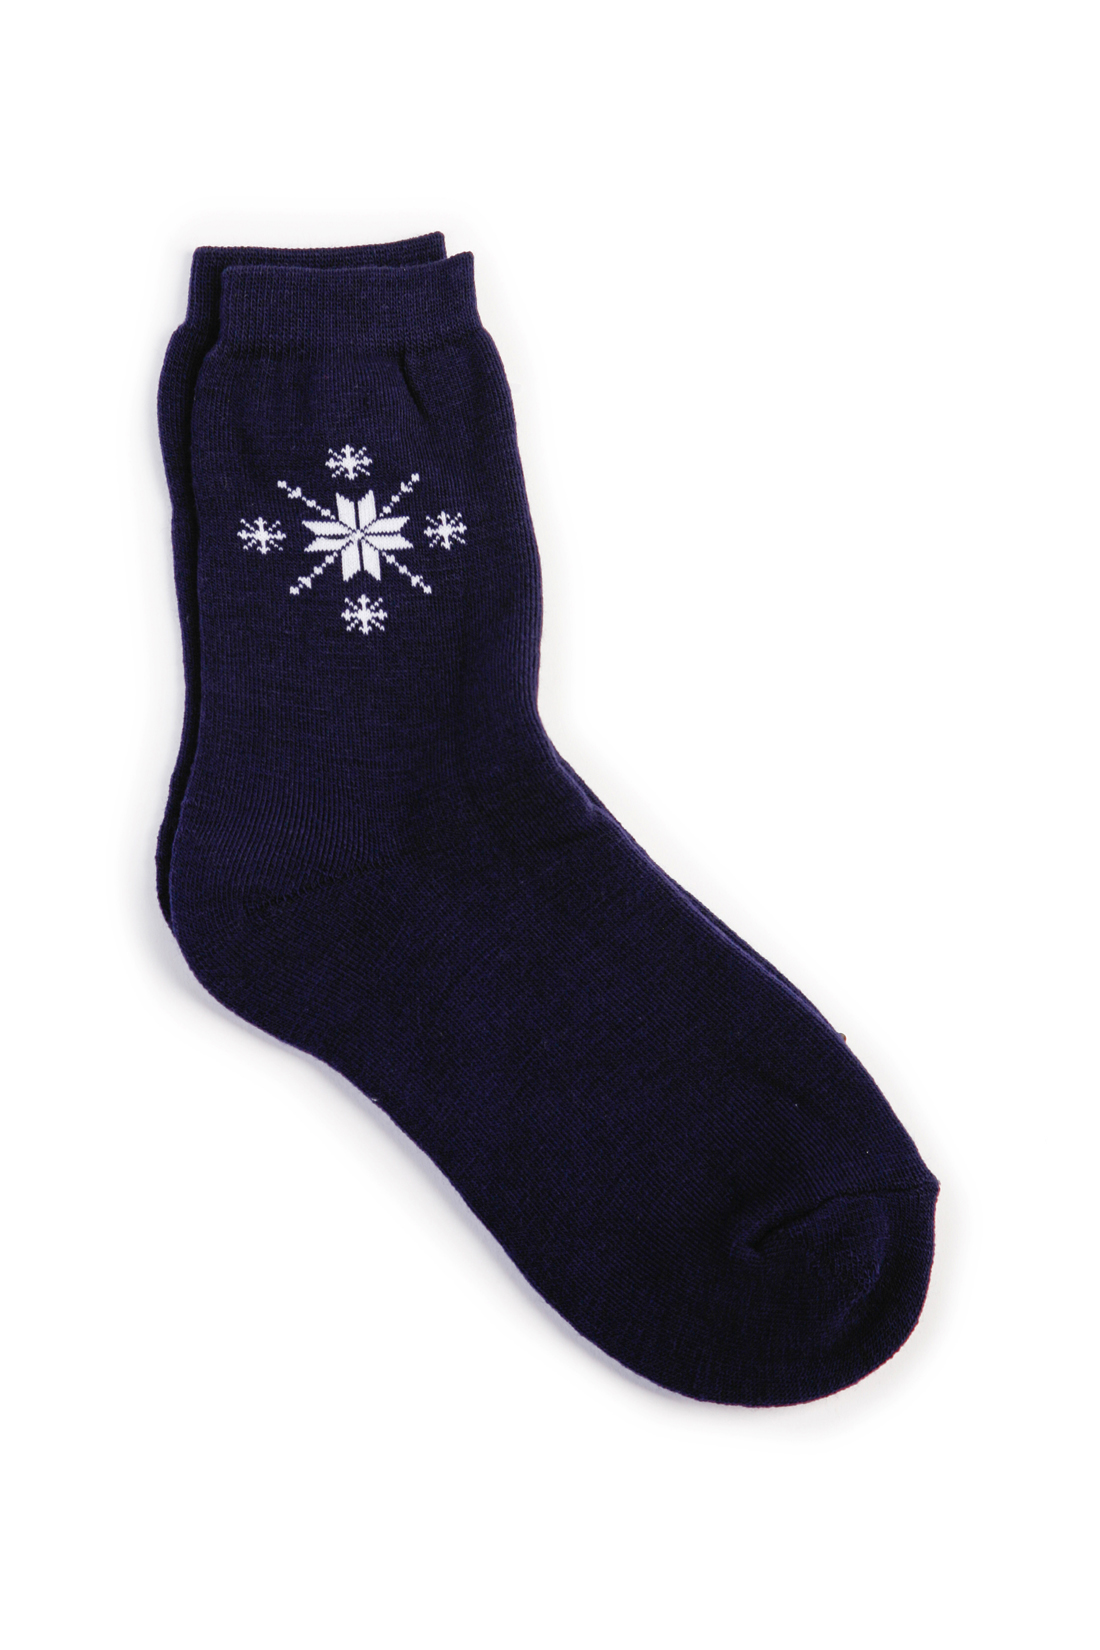 Махровые носки с узором (арт. baon B398508), размер 38/40, цвет синий